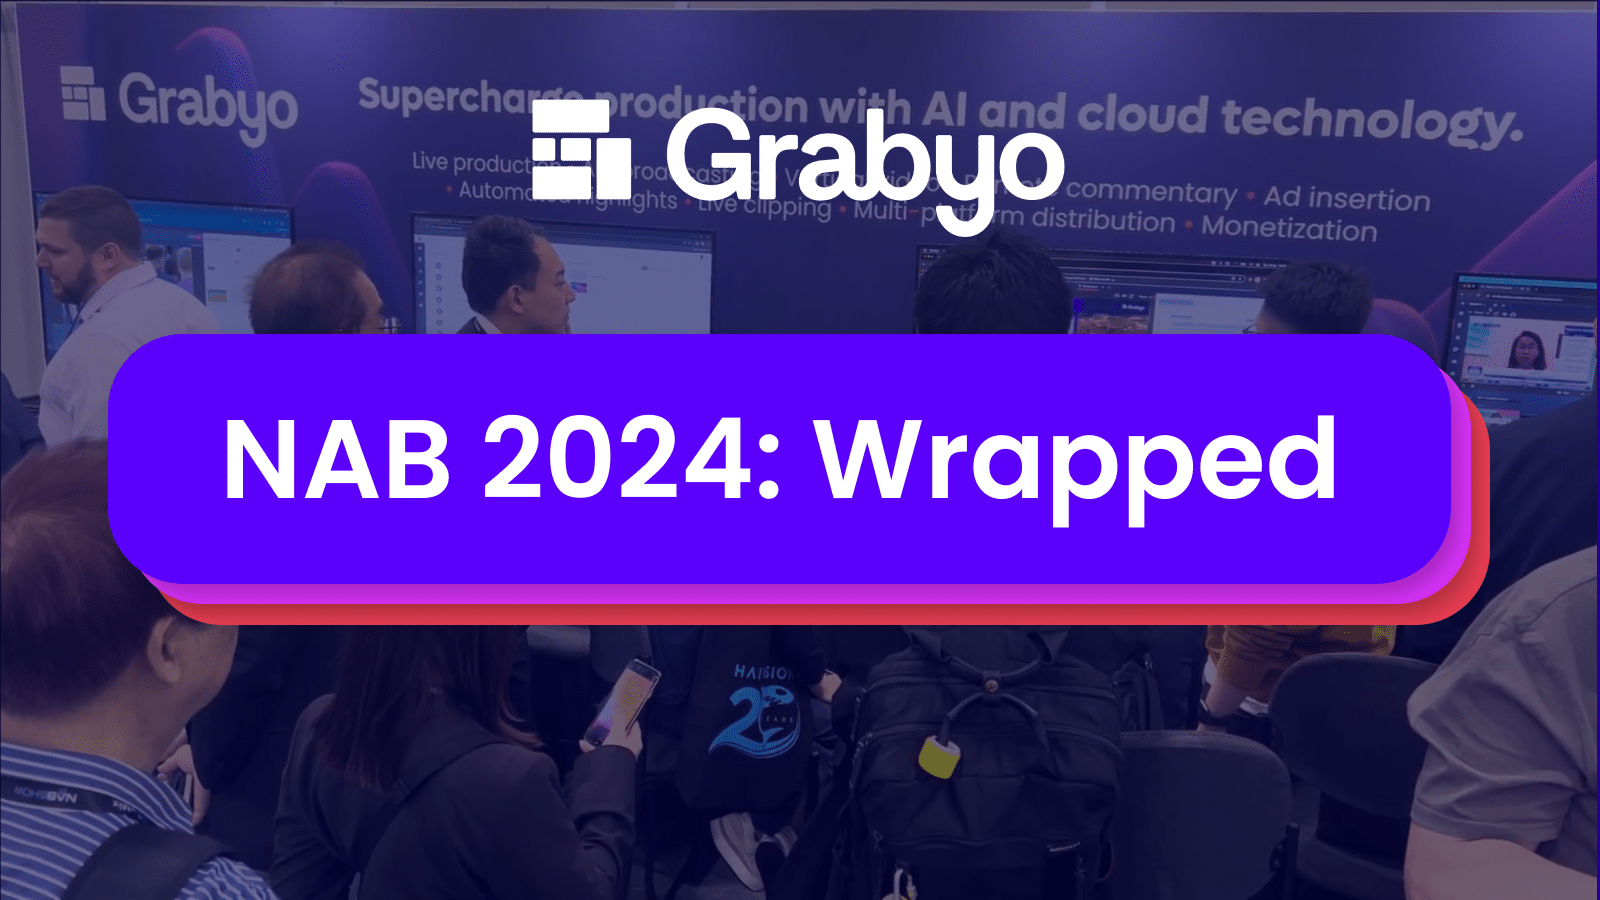 Grabyo's NAB 2024 Wrapped